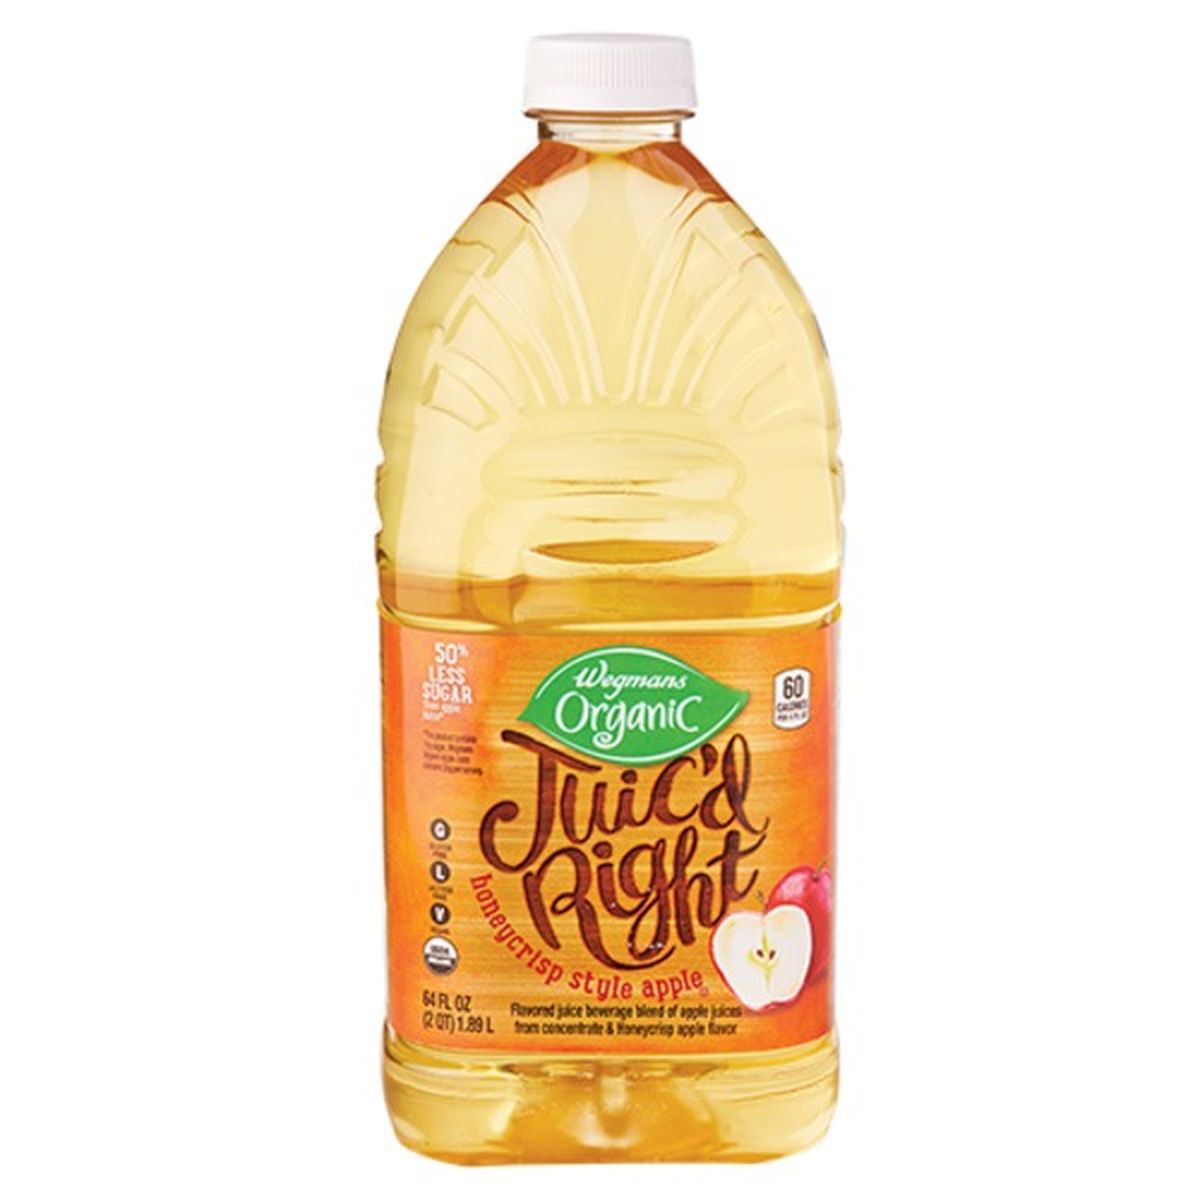 Calories in Wegmans Organic Juic'd Right, Honeycrisp Style Apple